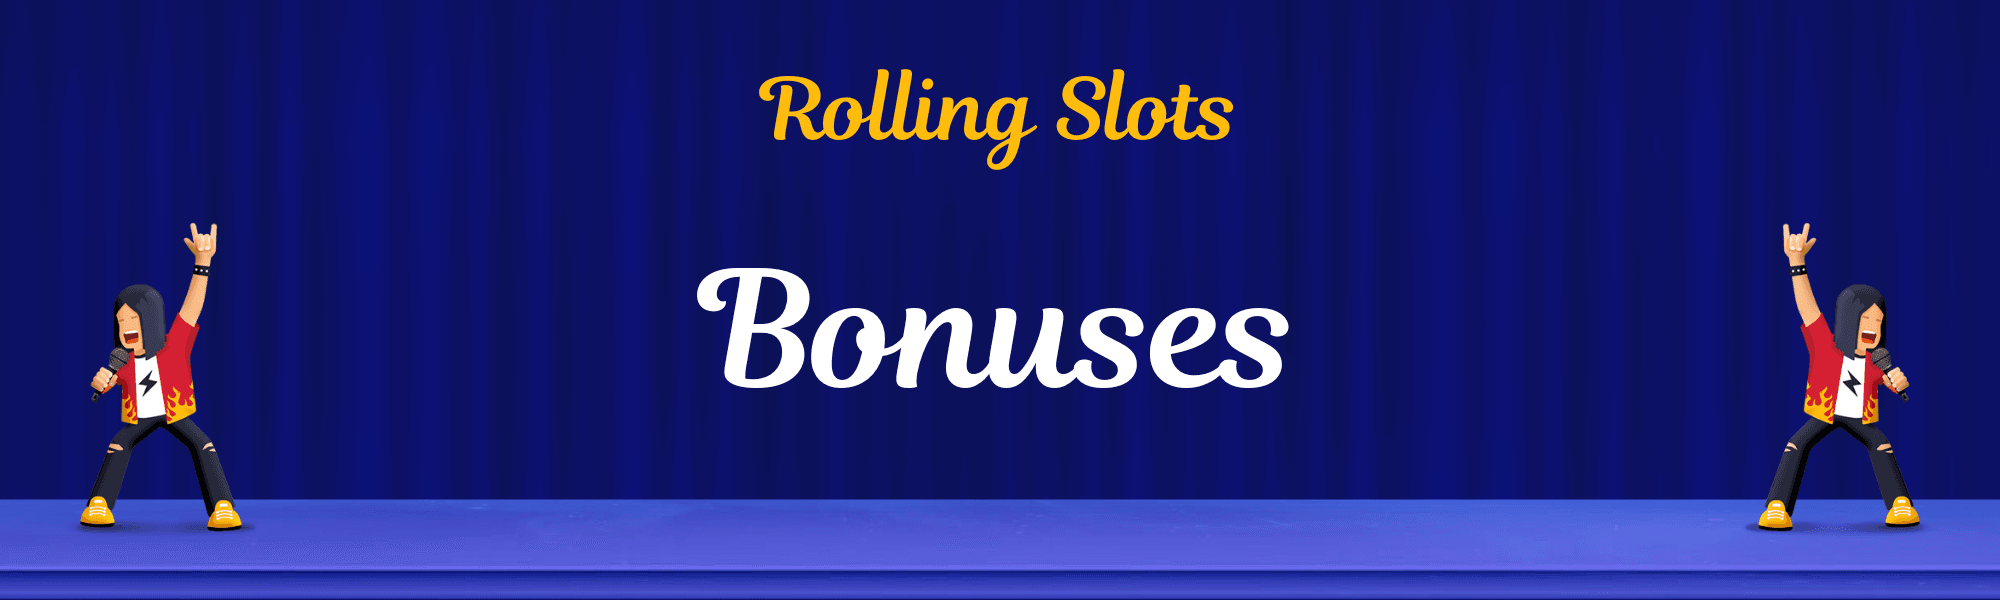 Rolling Slots Bonuses.png